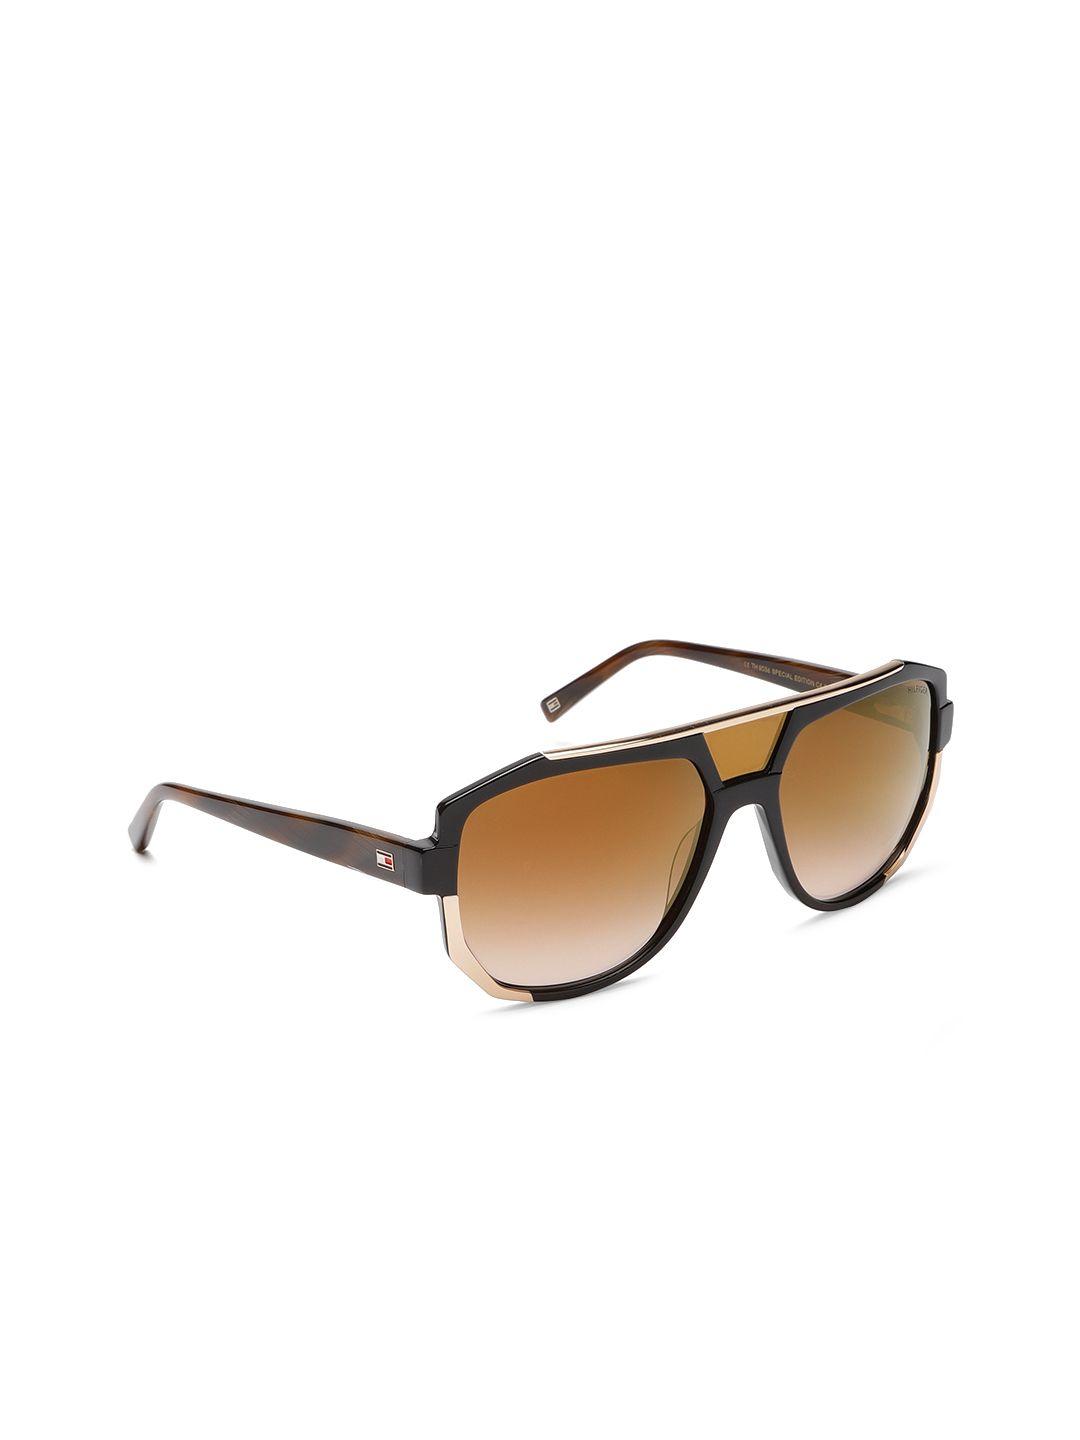 tommy hilfiger unisex oversized sunglasses th 9036 blkgd-34 c4 60